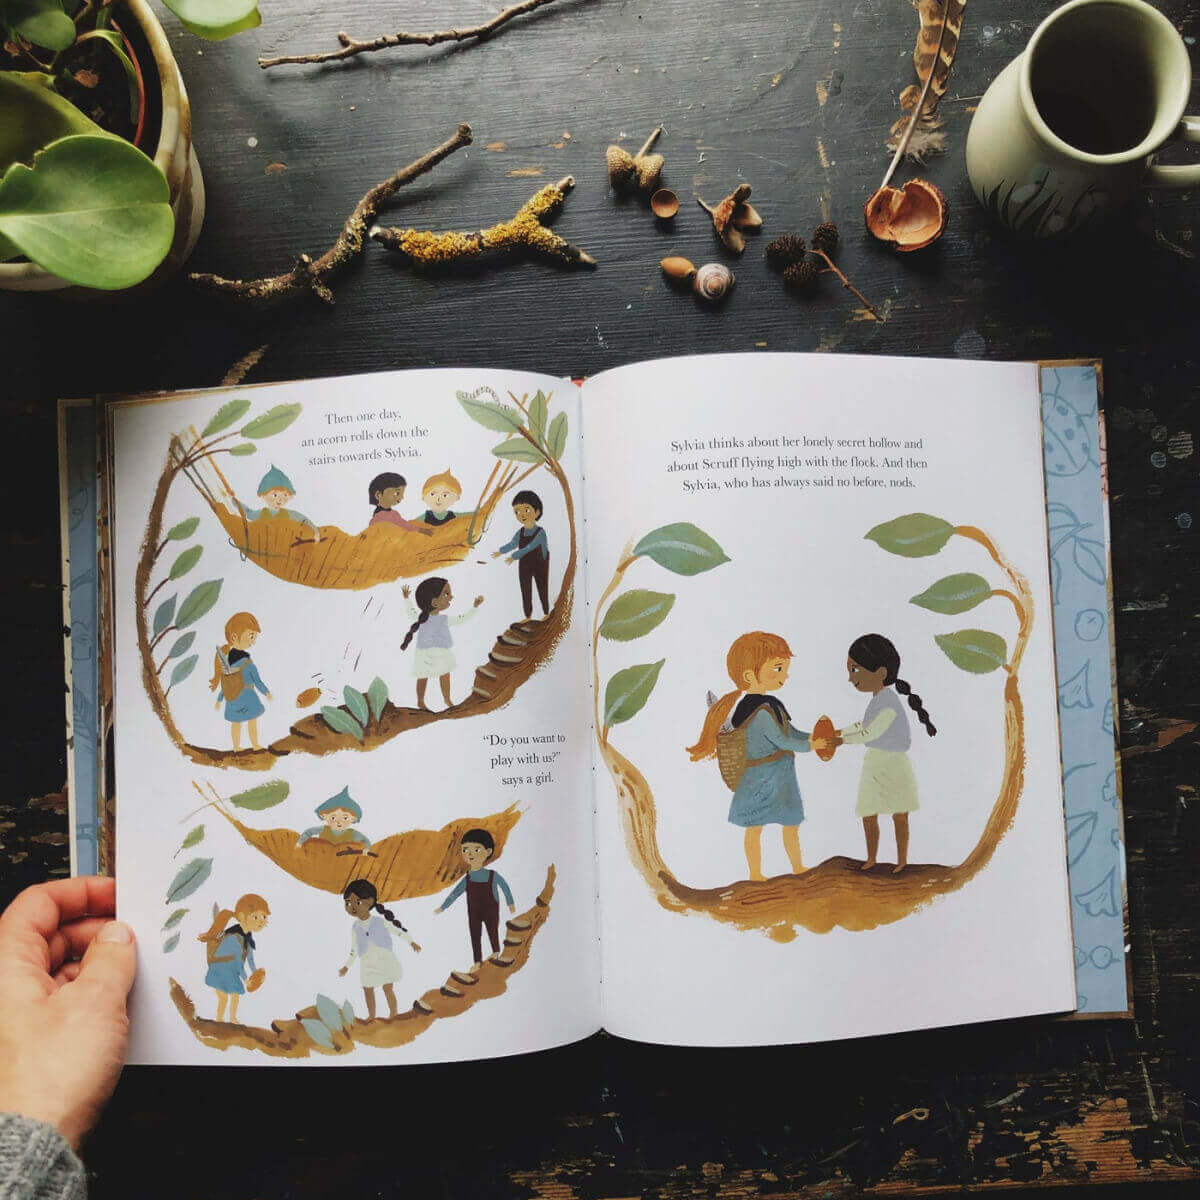 flock-a-tree-keeper-adventure-childrens-book-gemma-koomen